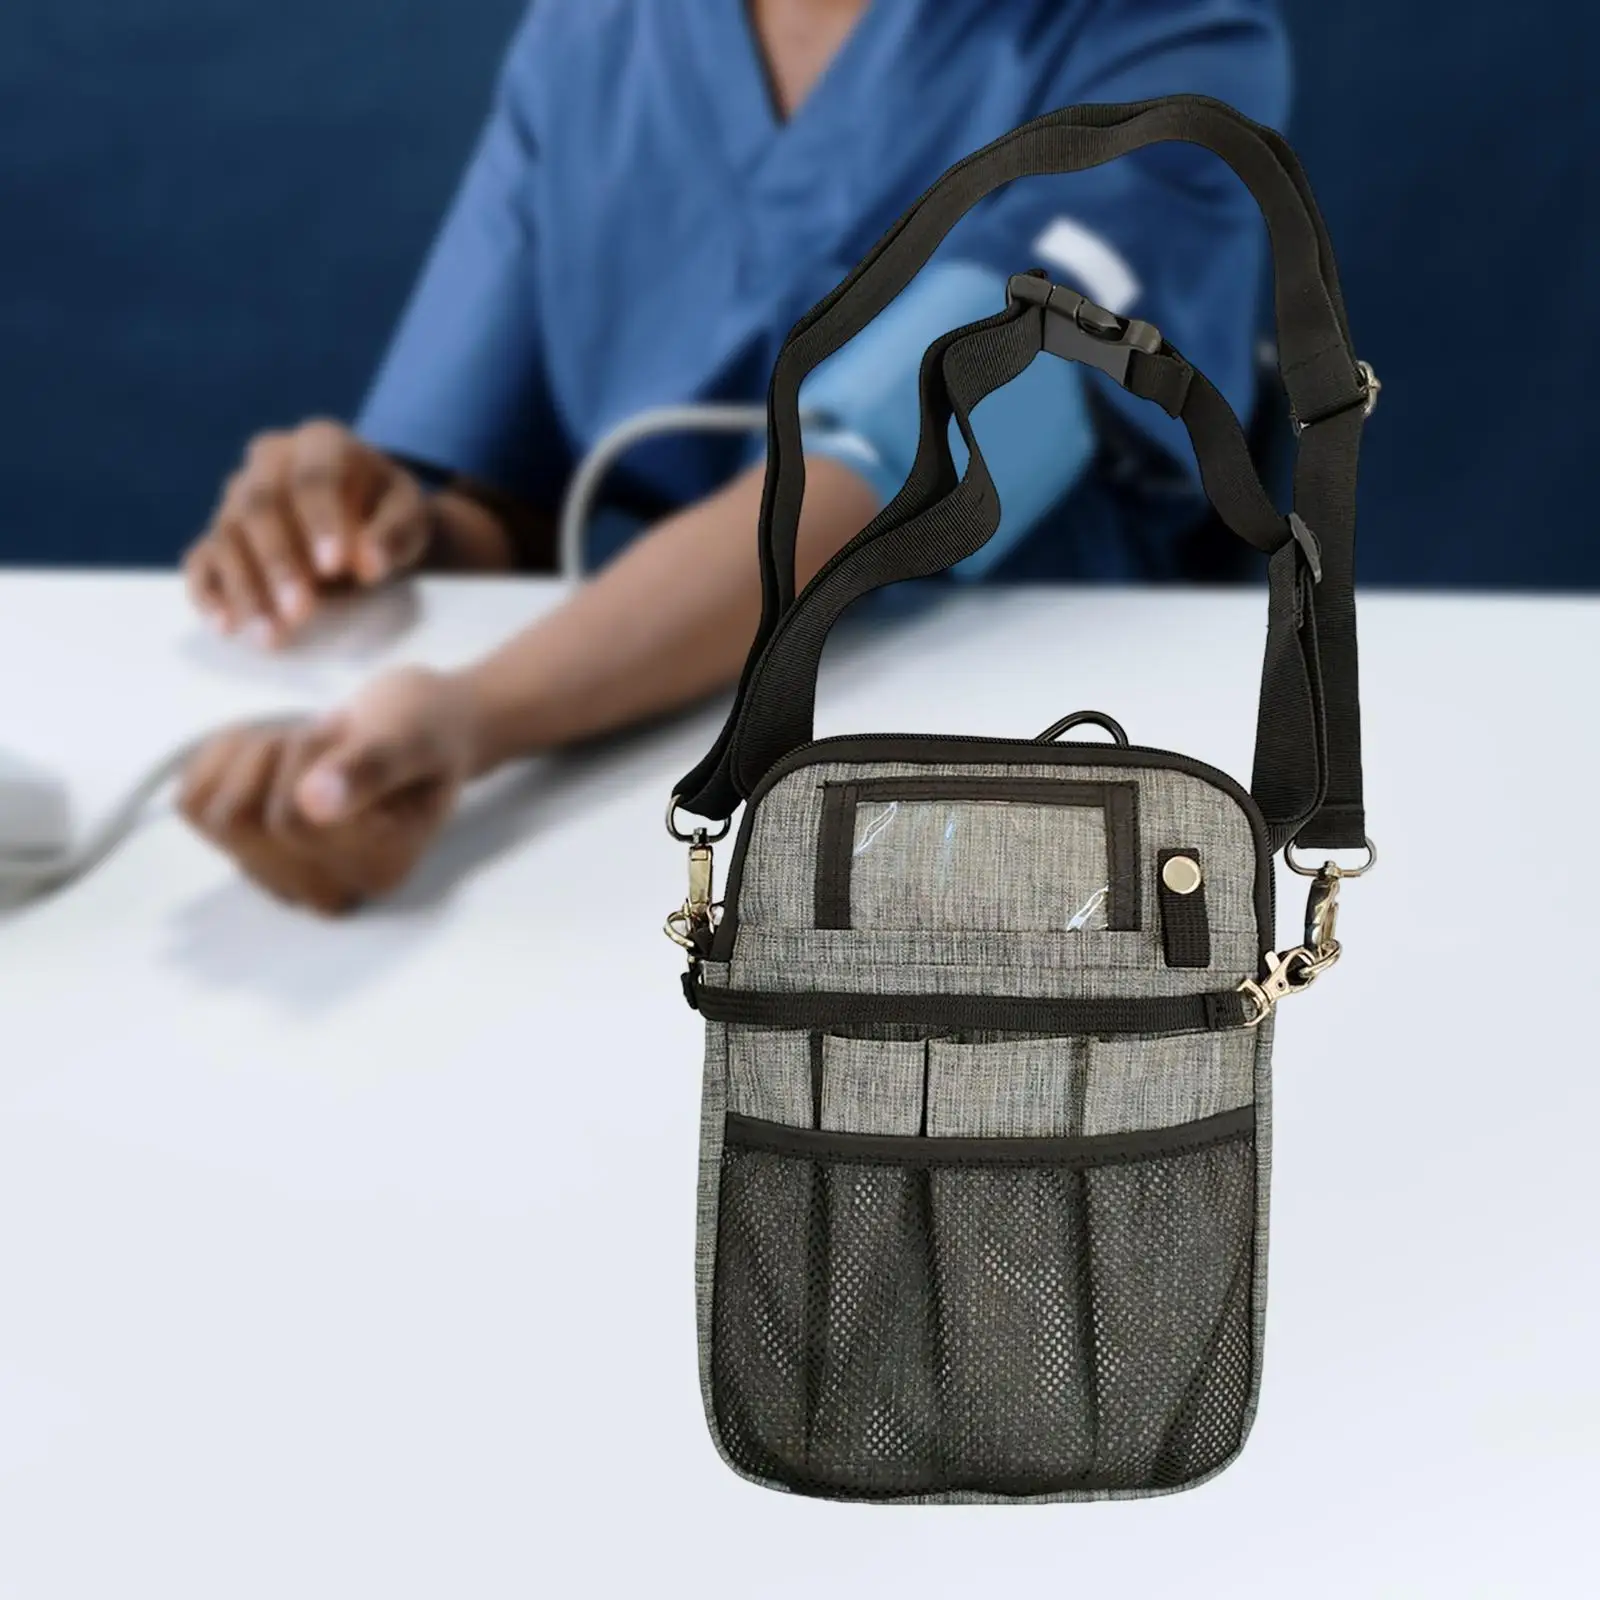 Nursing Fanny Pack, Nurse Bag Organizer for Women Men Nurses Belt Pocket Pouch